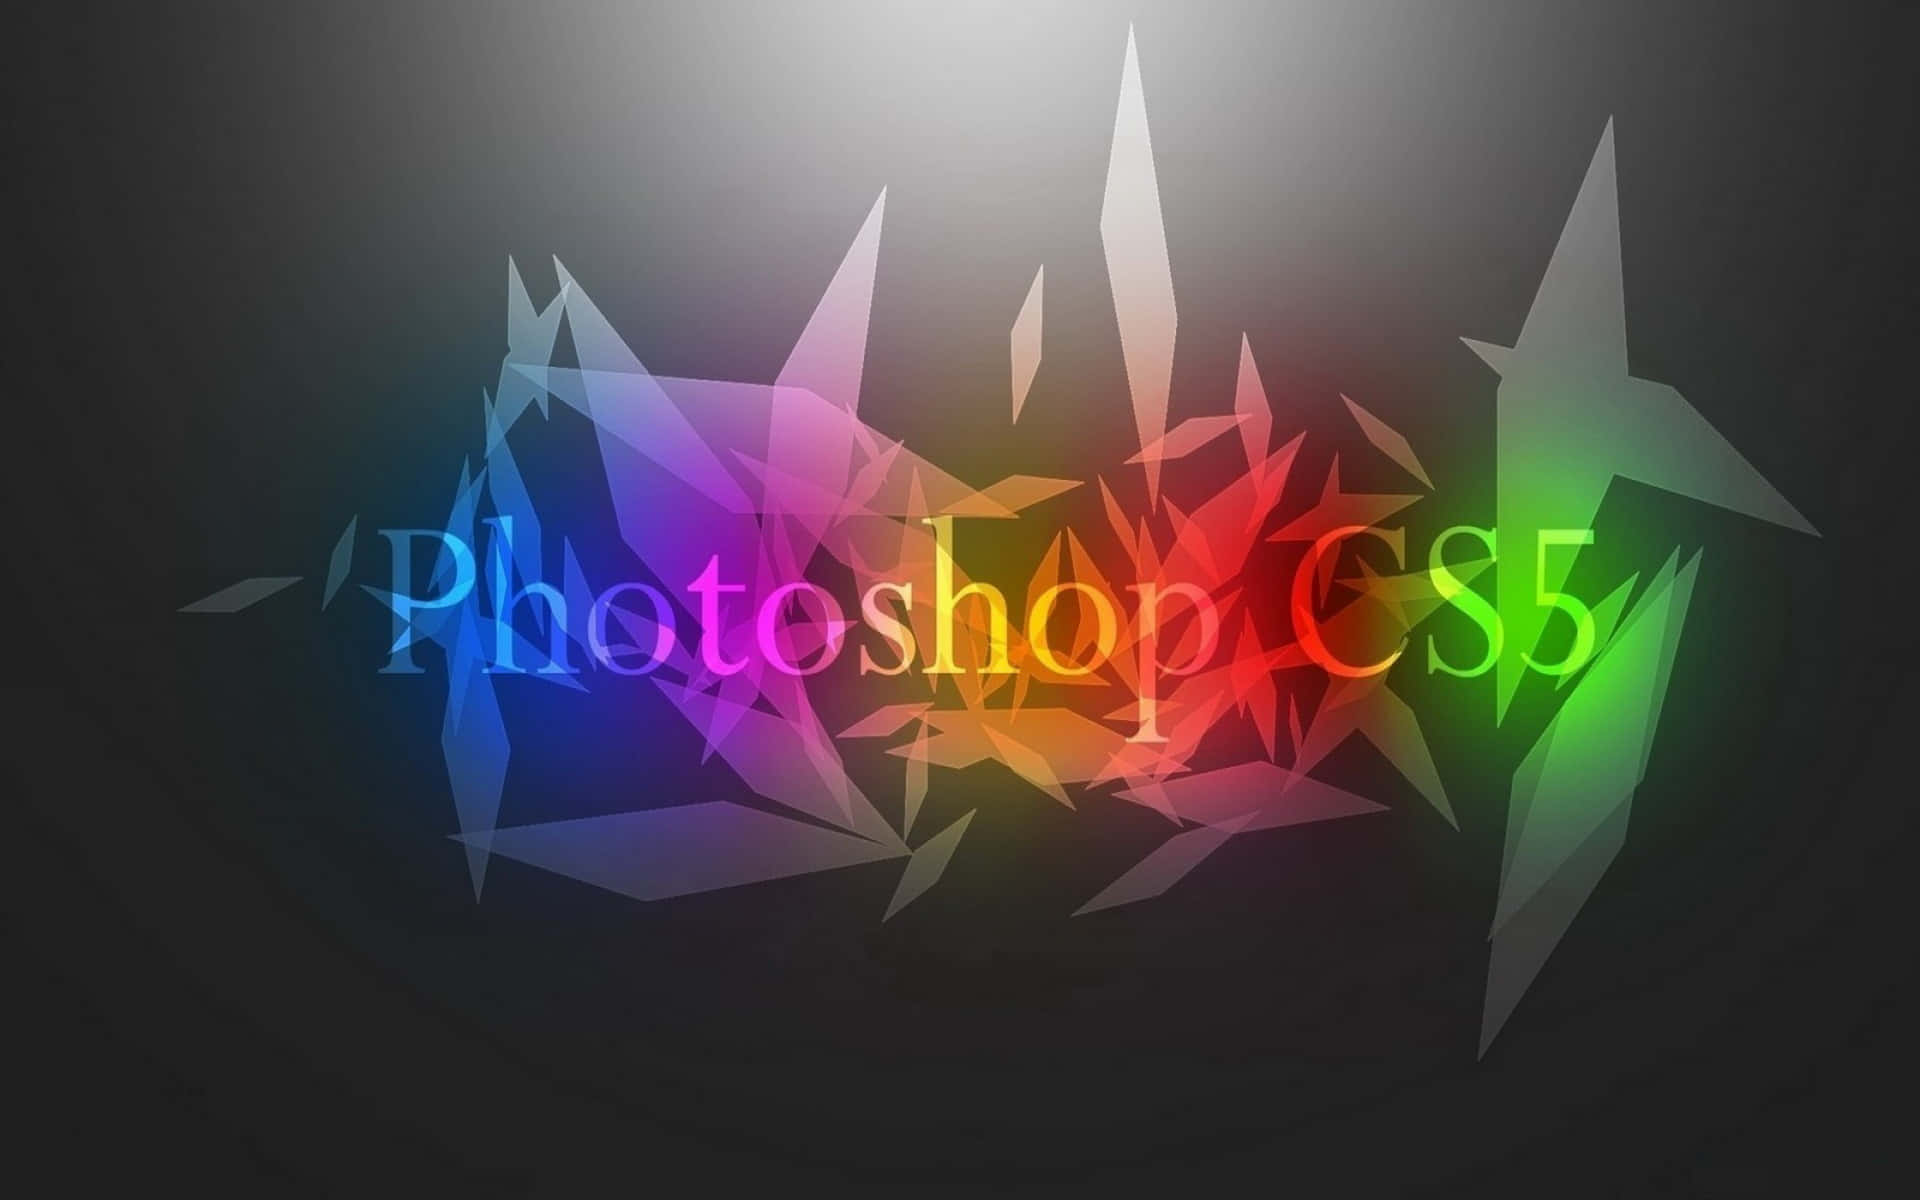 Photoshopcs5 Flerfärgat Logotyp (context: Datortapet Eller Mobil Bakgrundsbild) Wallpaper